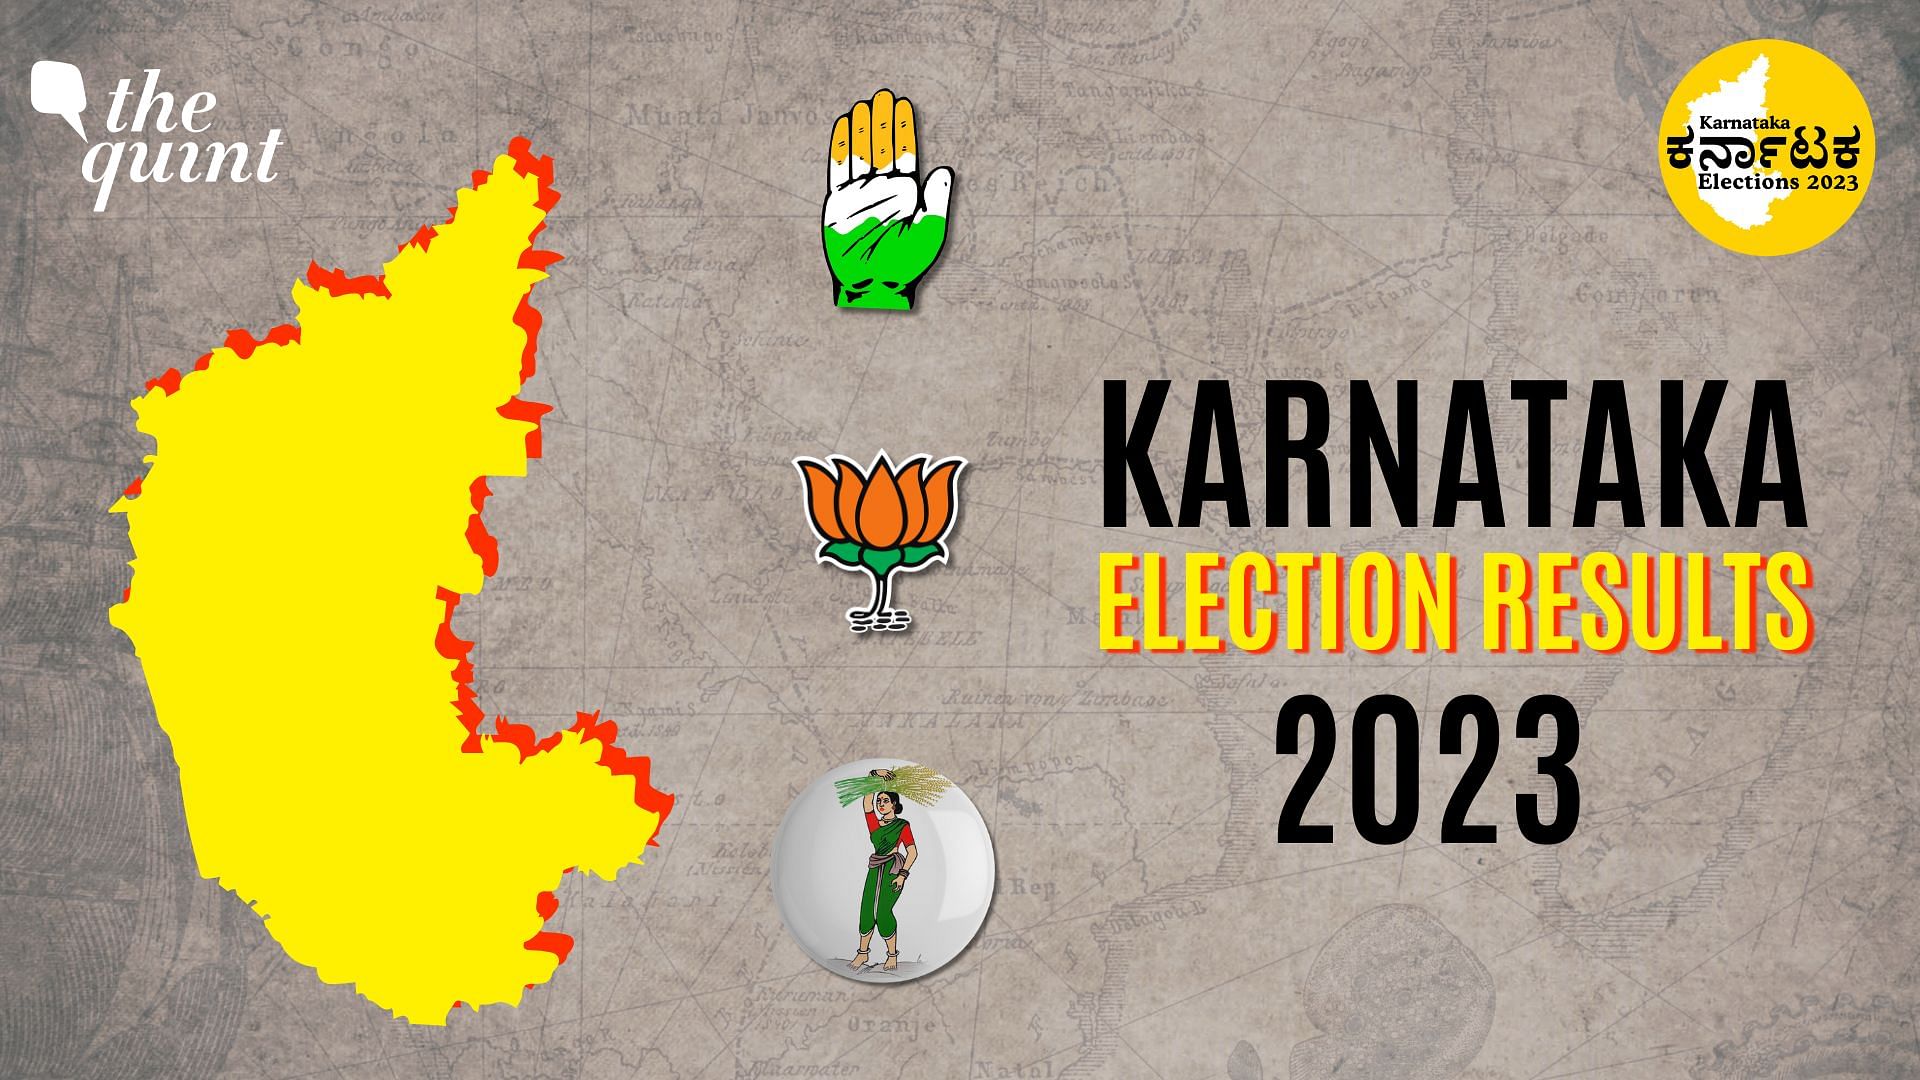 <div class="paragraphs"><p>Election Result live updates for Karnataka Assembly election 2023.</p></div>